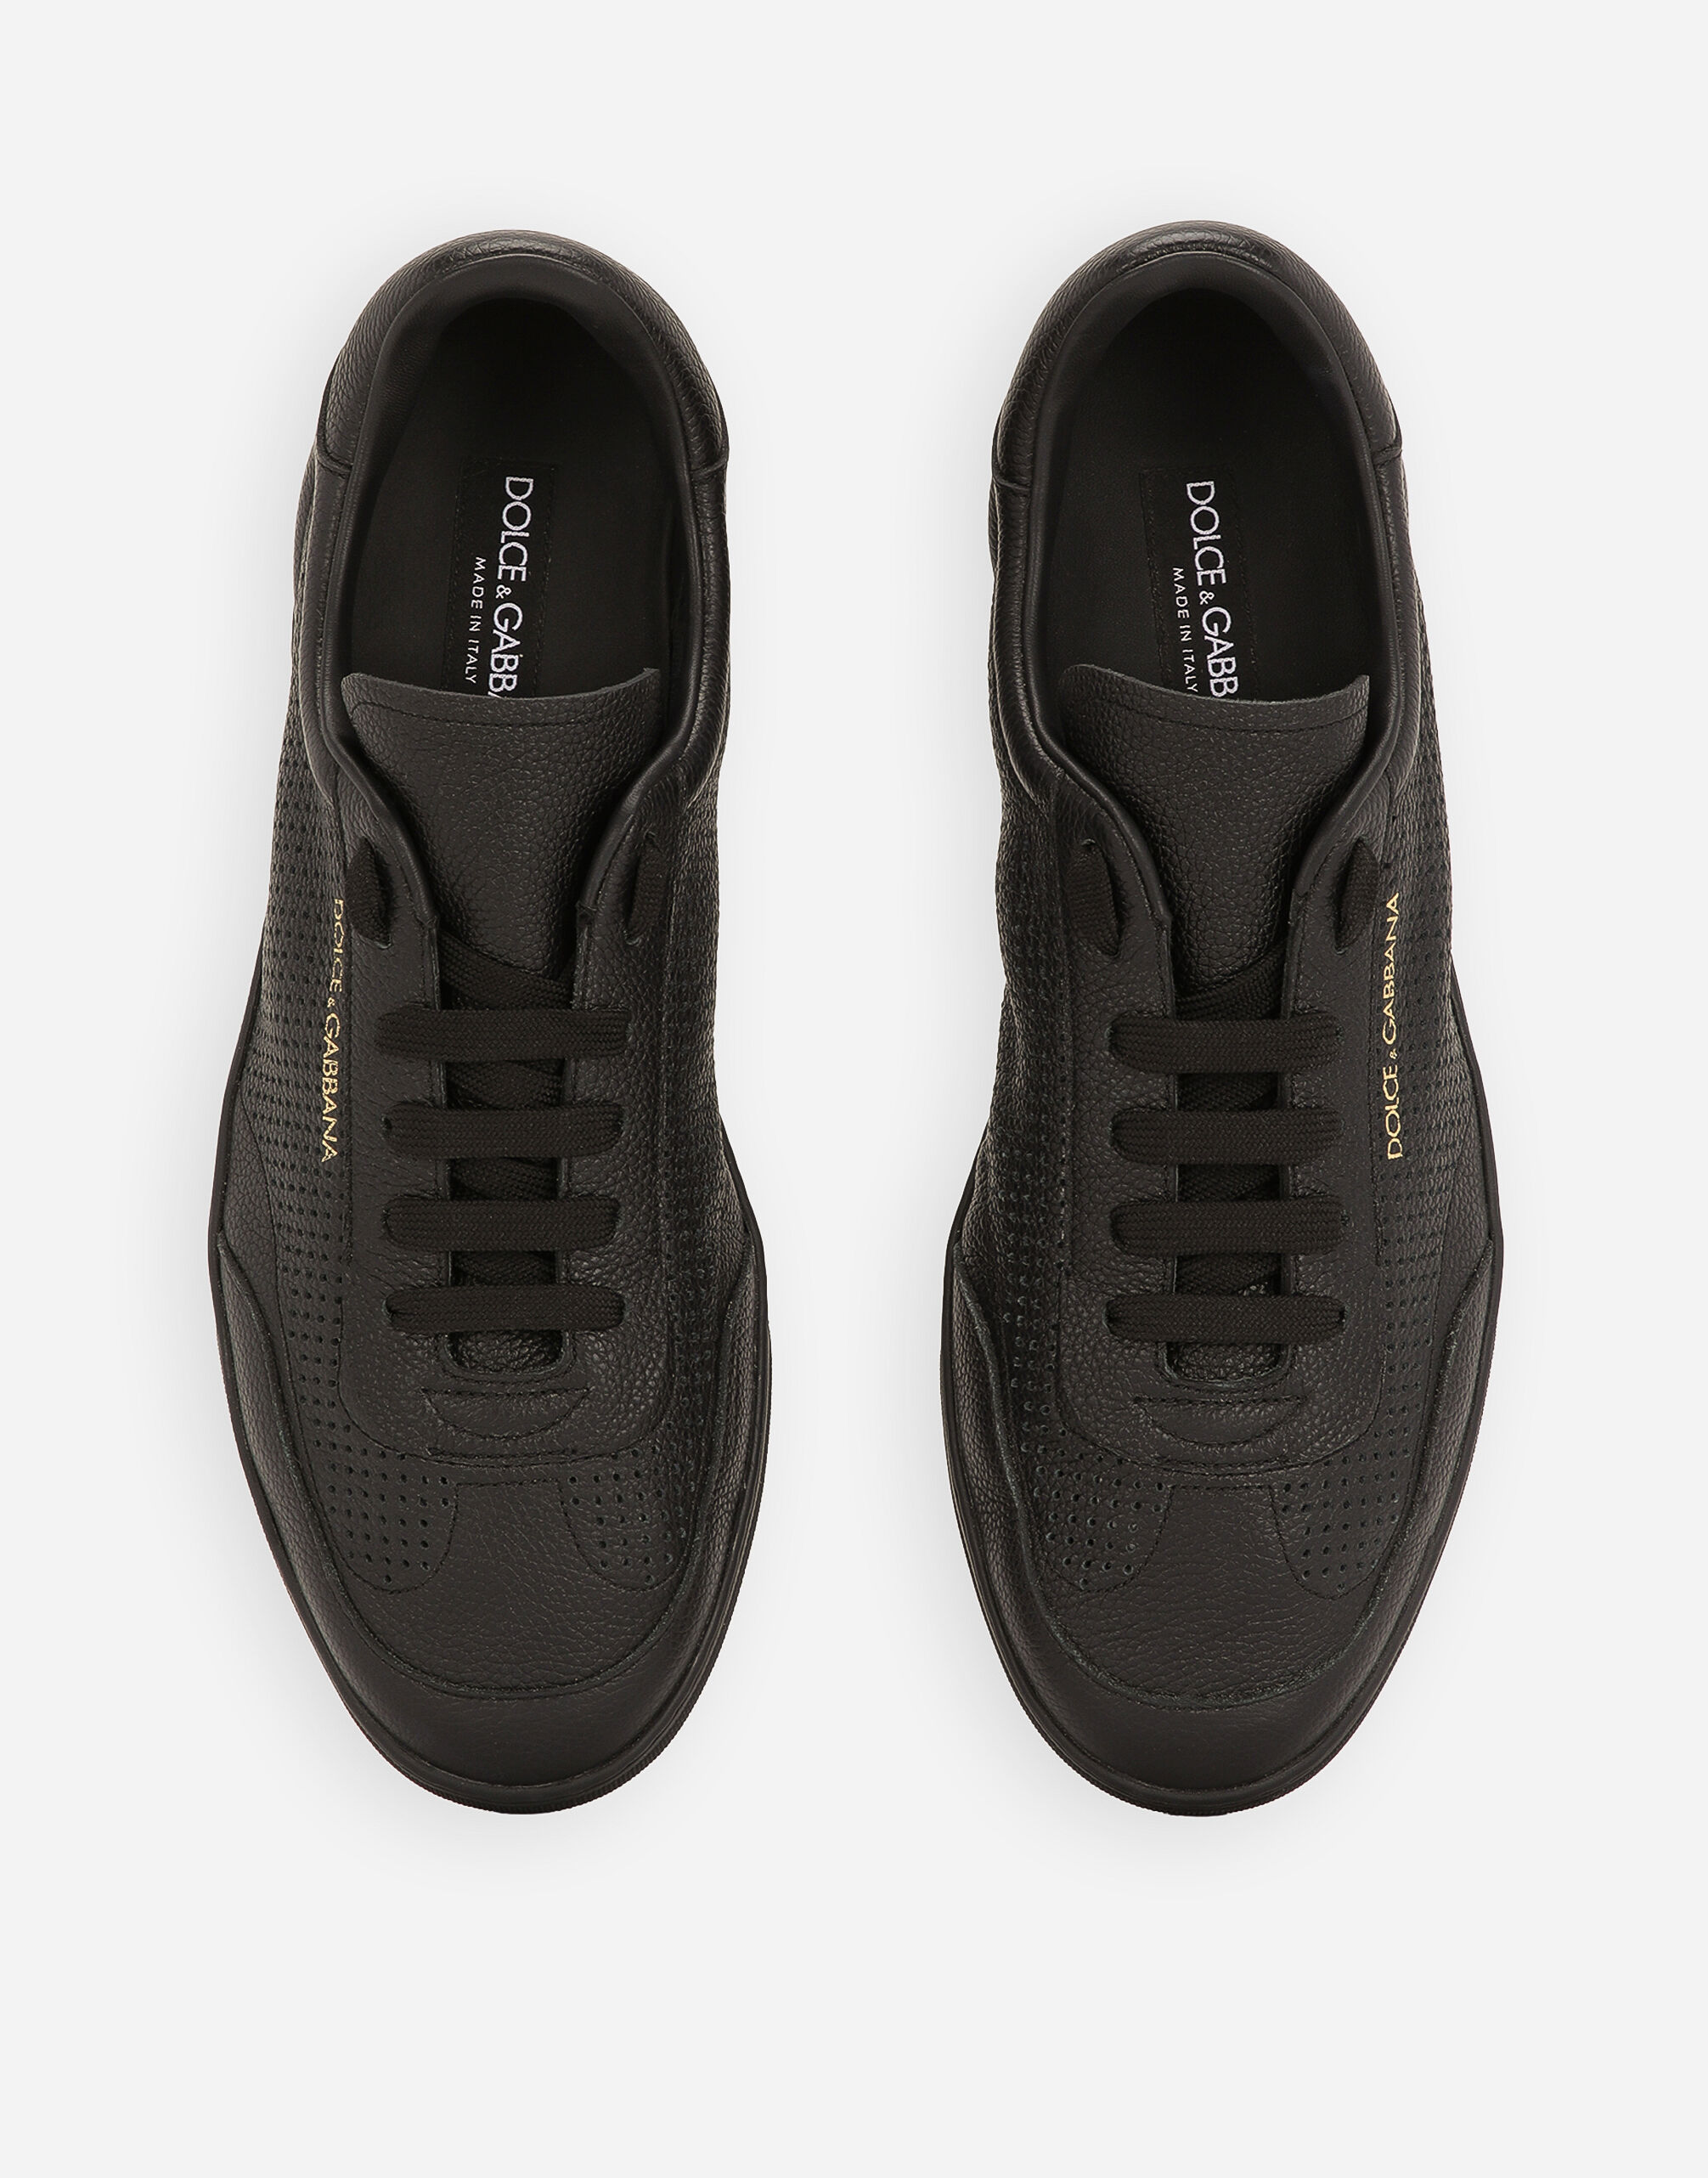 Perforated calfskin Saint Tropez sneakers in Black for Men 